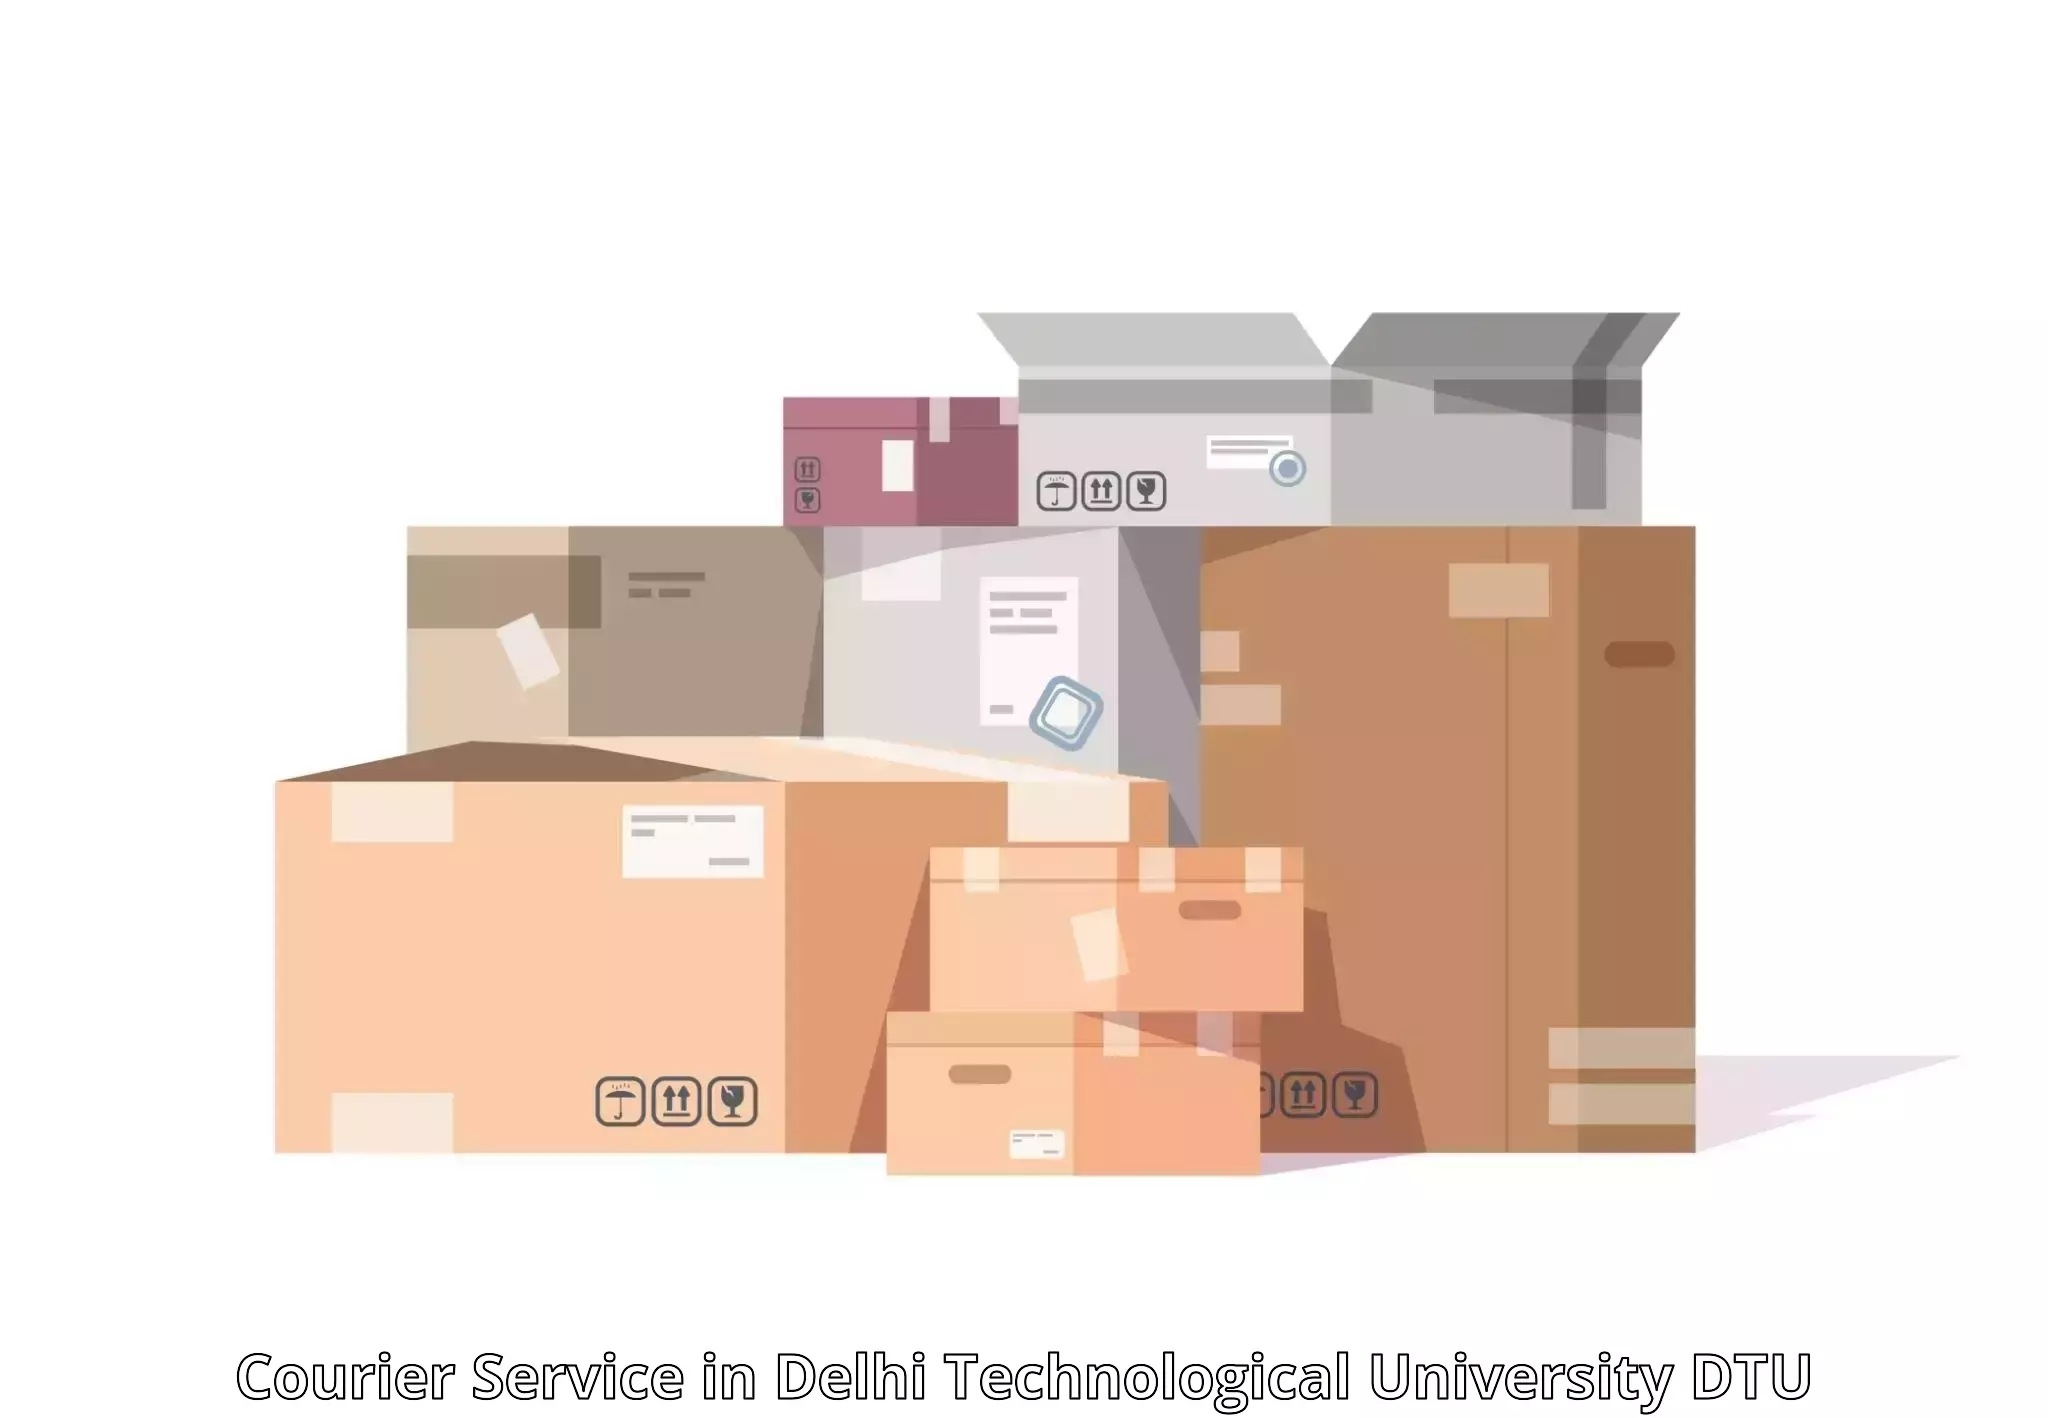 Next day courier in Delhi Technological University DTU